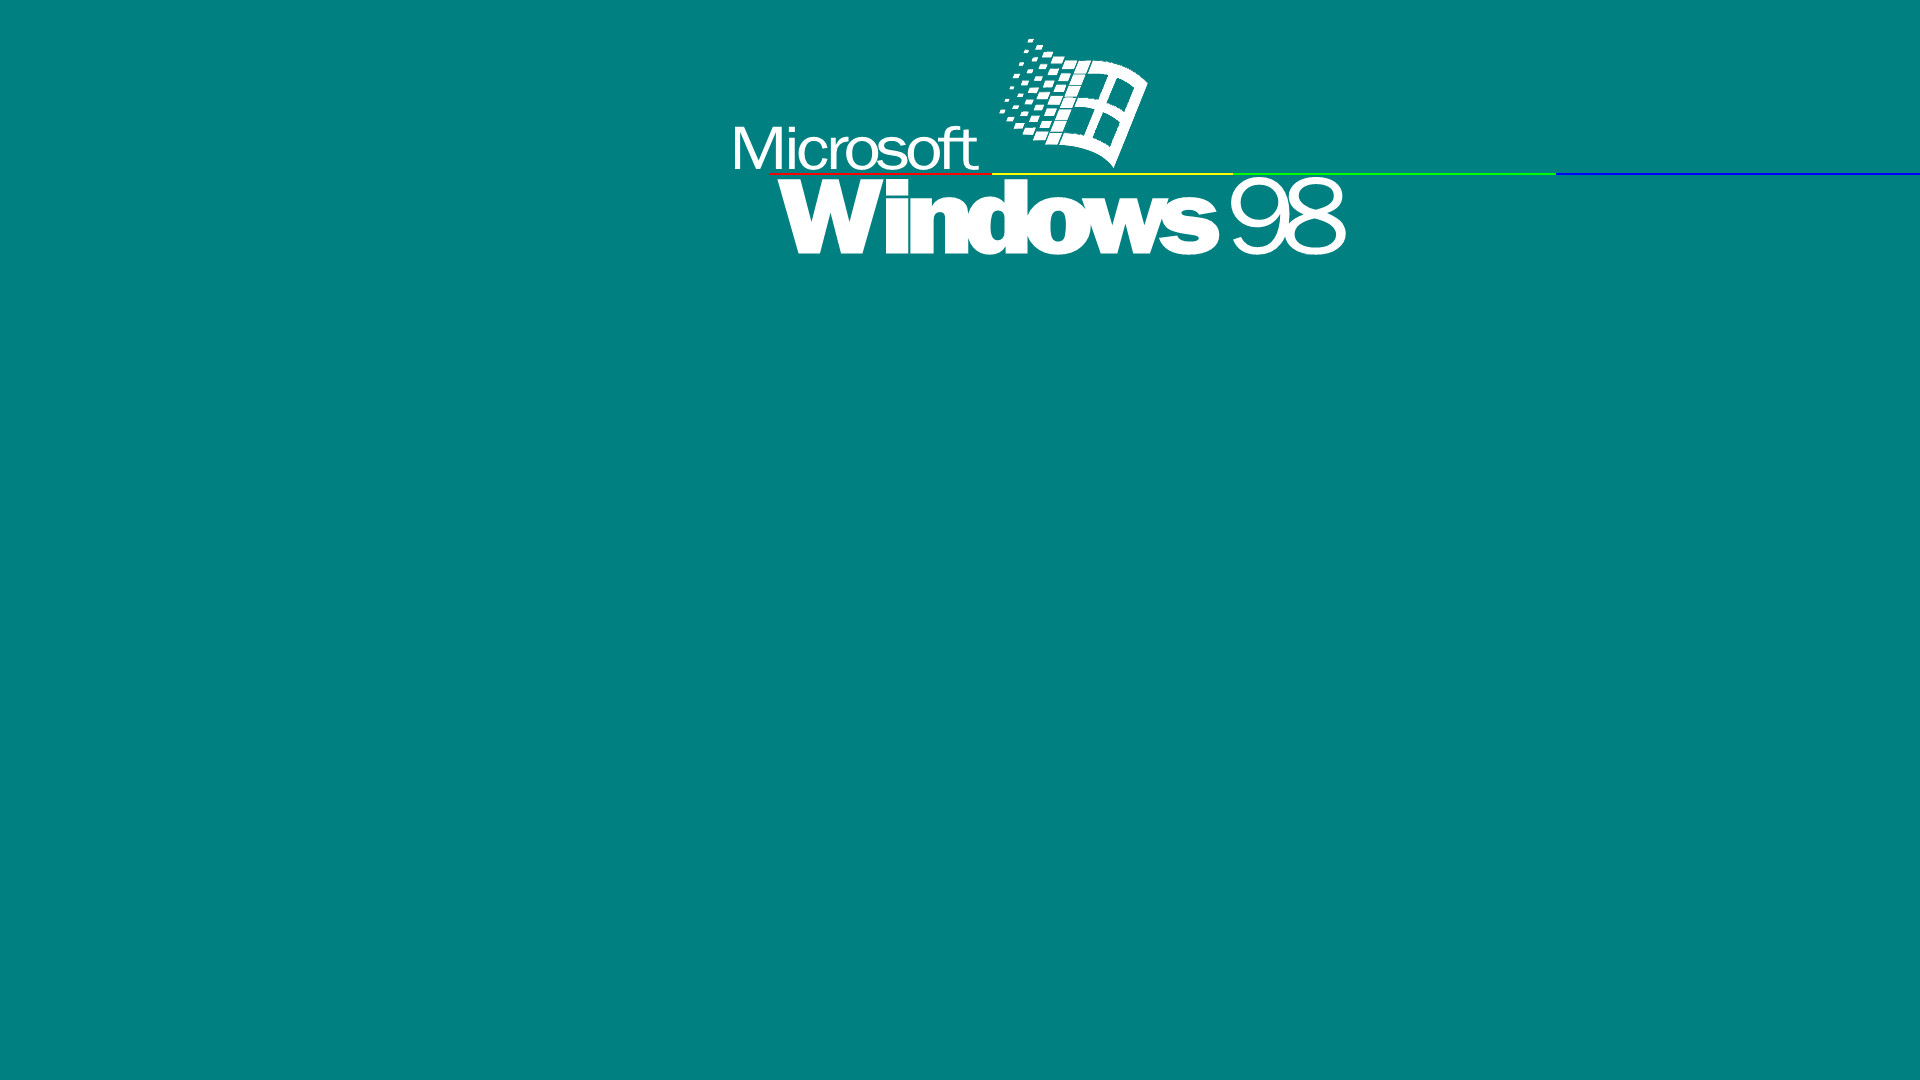 1920x1080 Windows 98 Retro Wallpaper by Axeldragani on DeviantArt